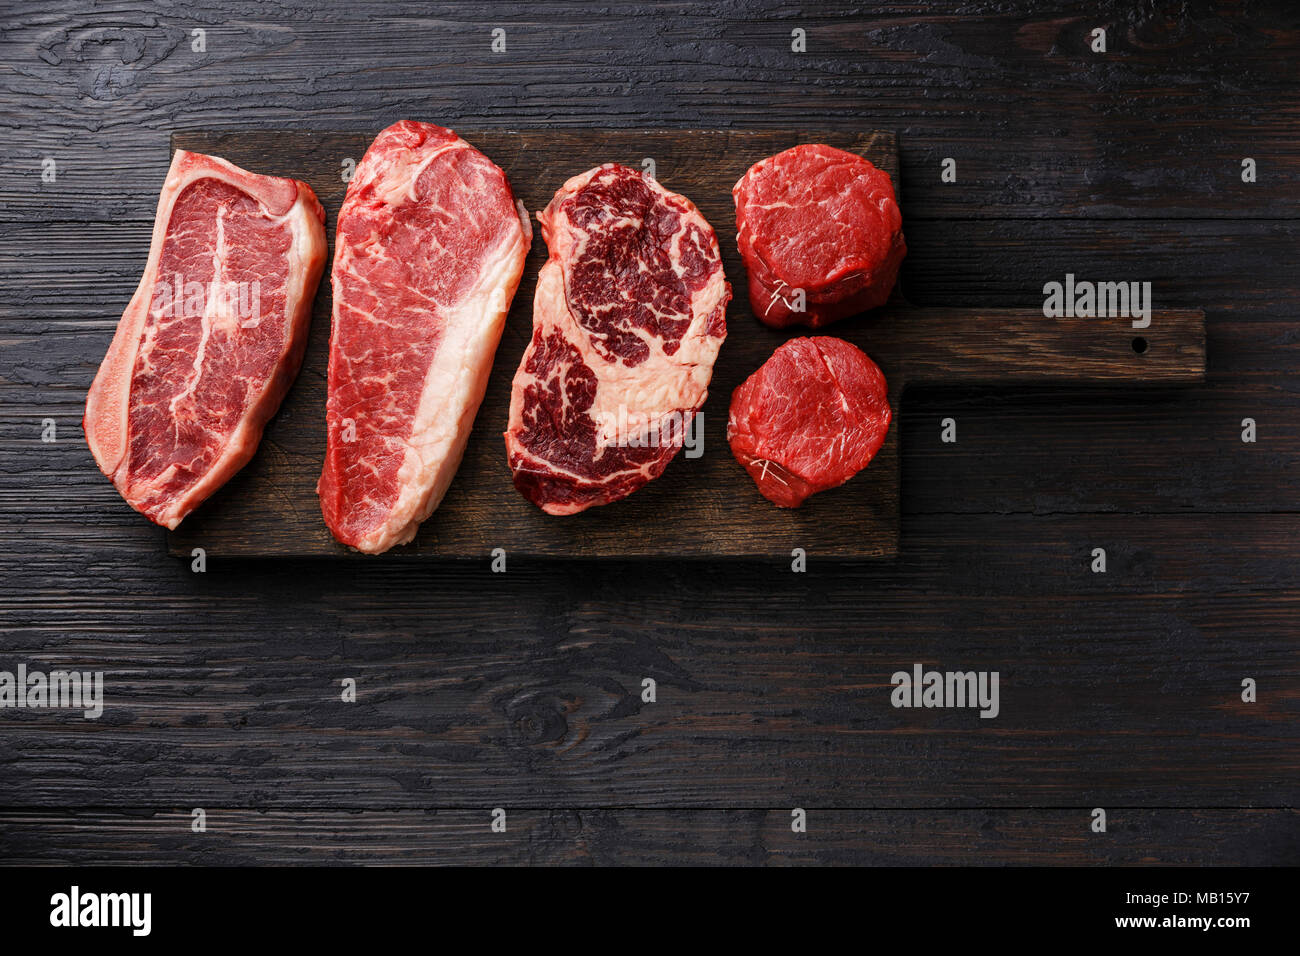 Variety of Raw Black Angus Prime meat steaks Blade on bone, Striploin, Rib eye, Tenderloin fillet mignon on wooden board copy space Stock Photo